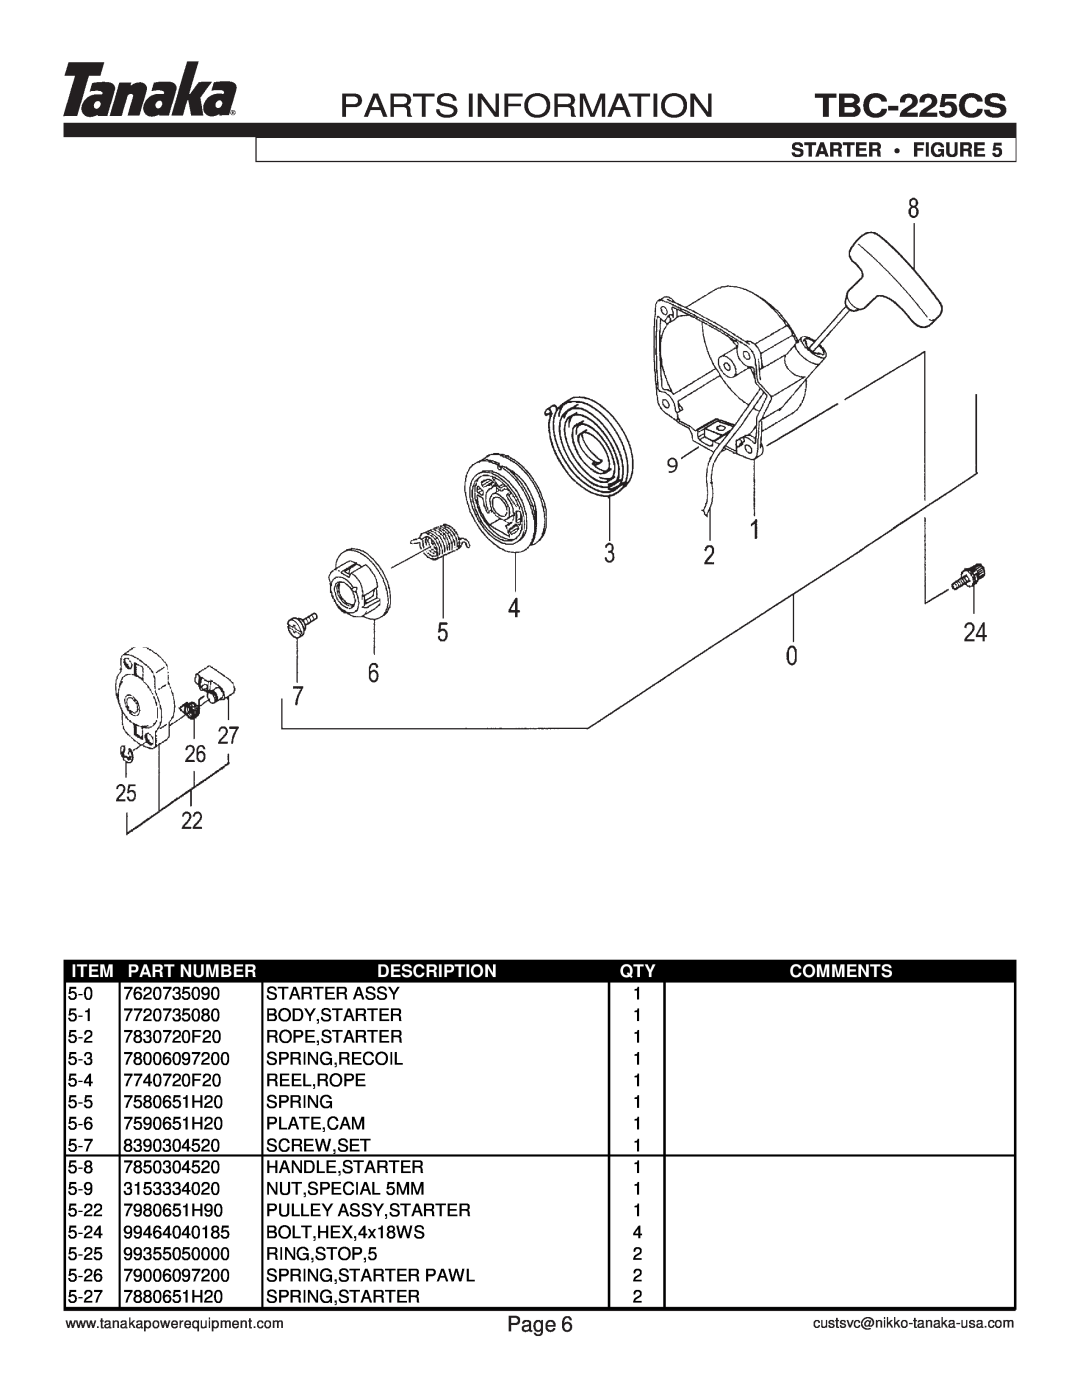 Tanaka TBC-225CS manual Starter Figure, Parts Information, Page, Part Number, Description, Comments 